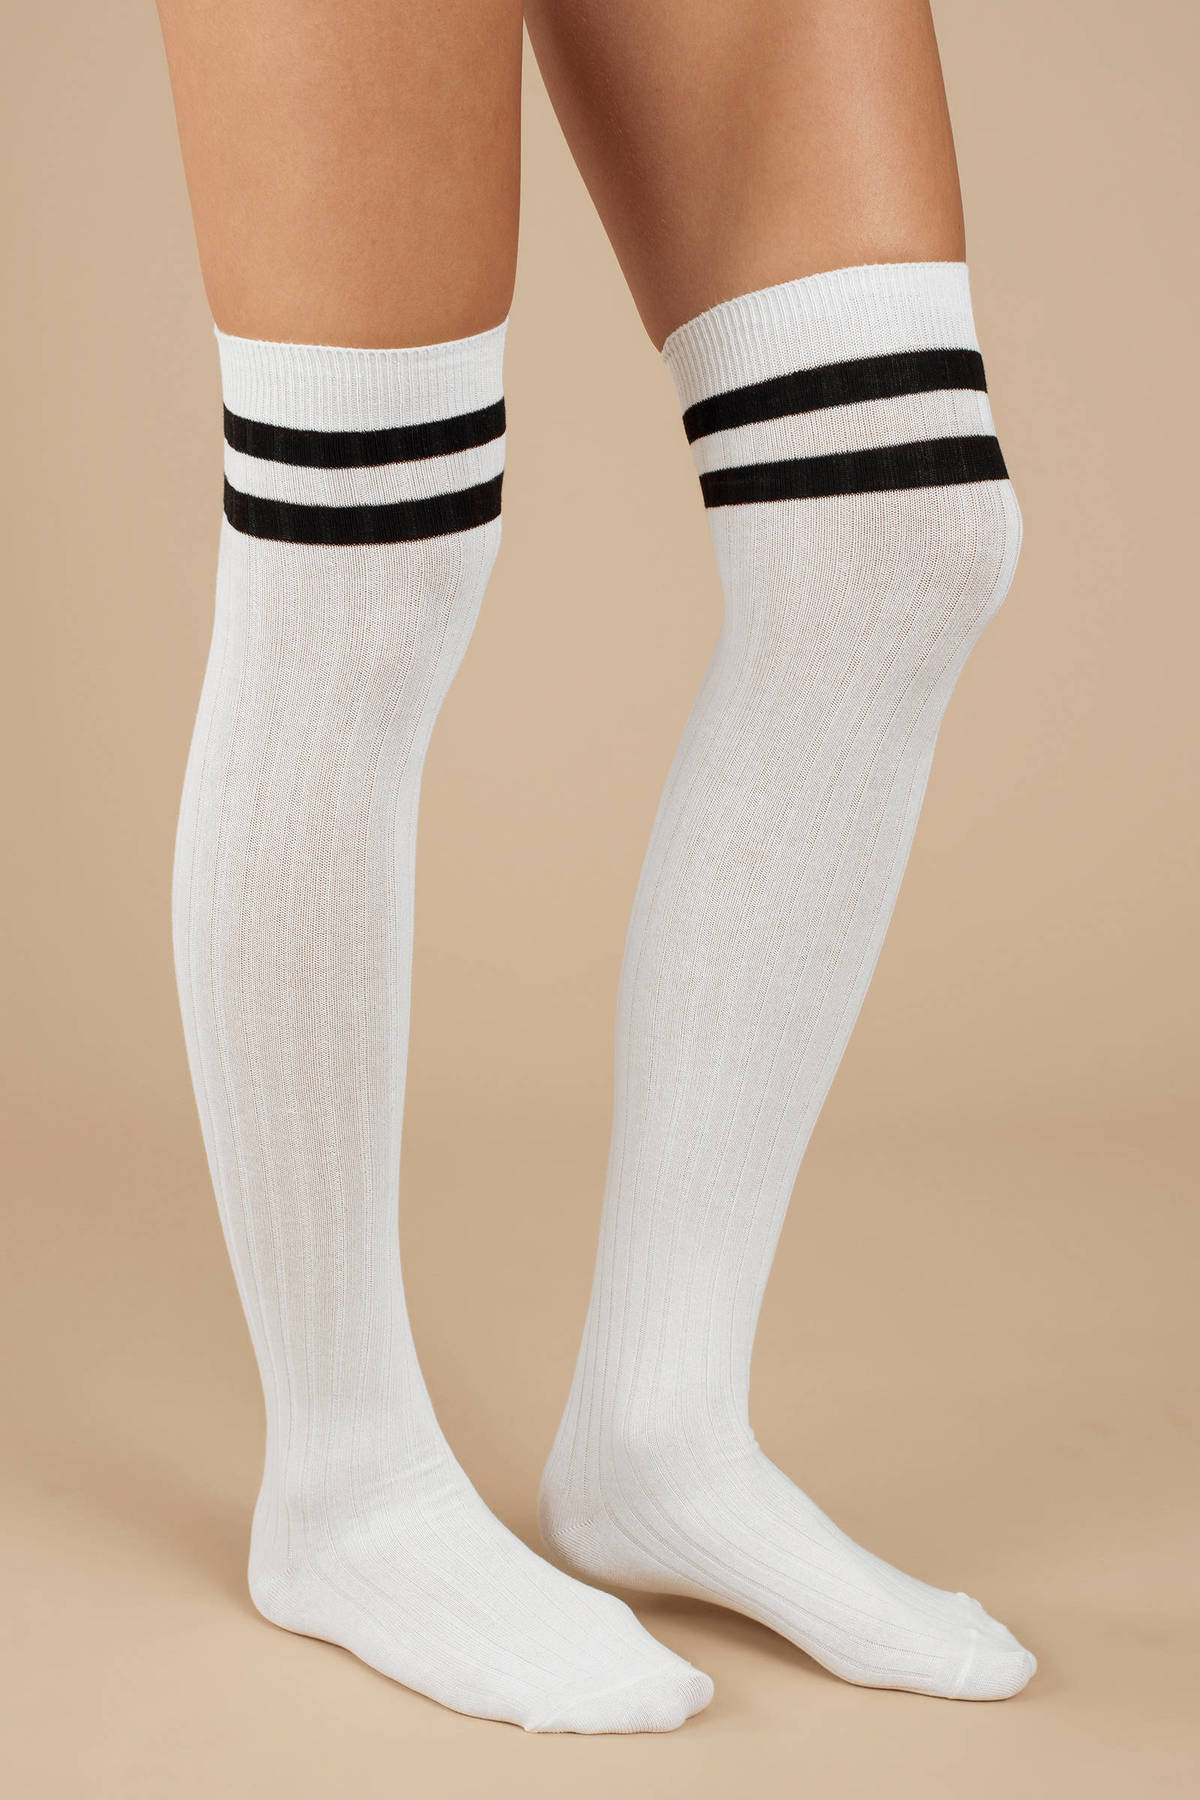 Kristal Knee High Socks in White - $8 | Tobi US